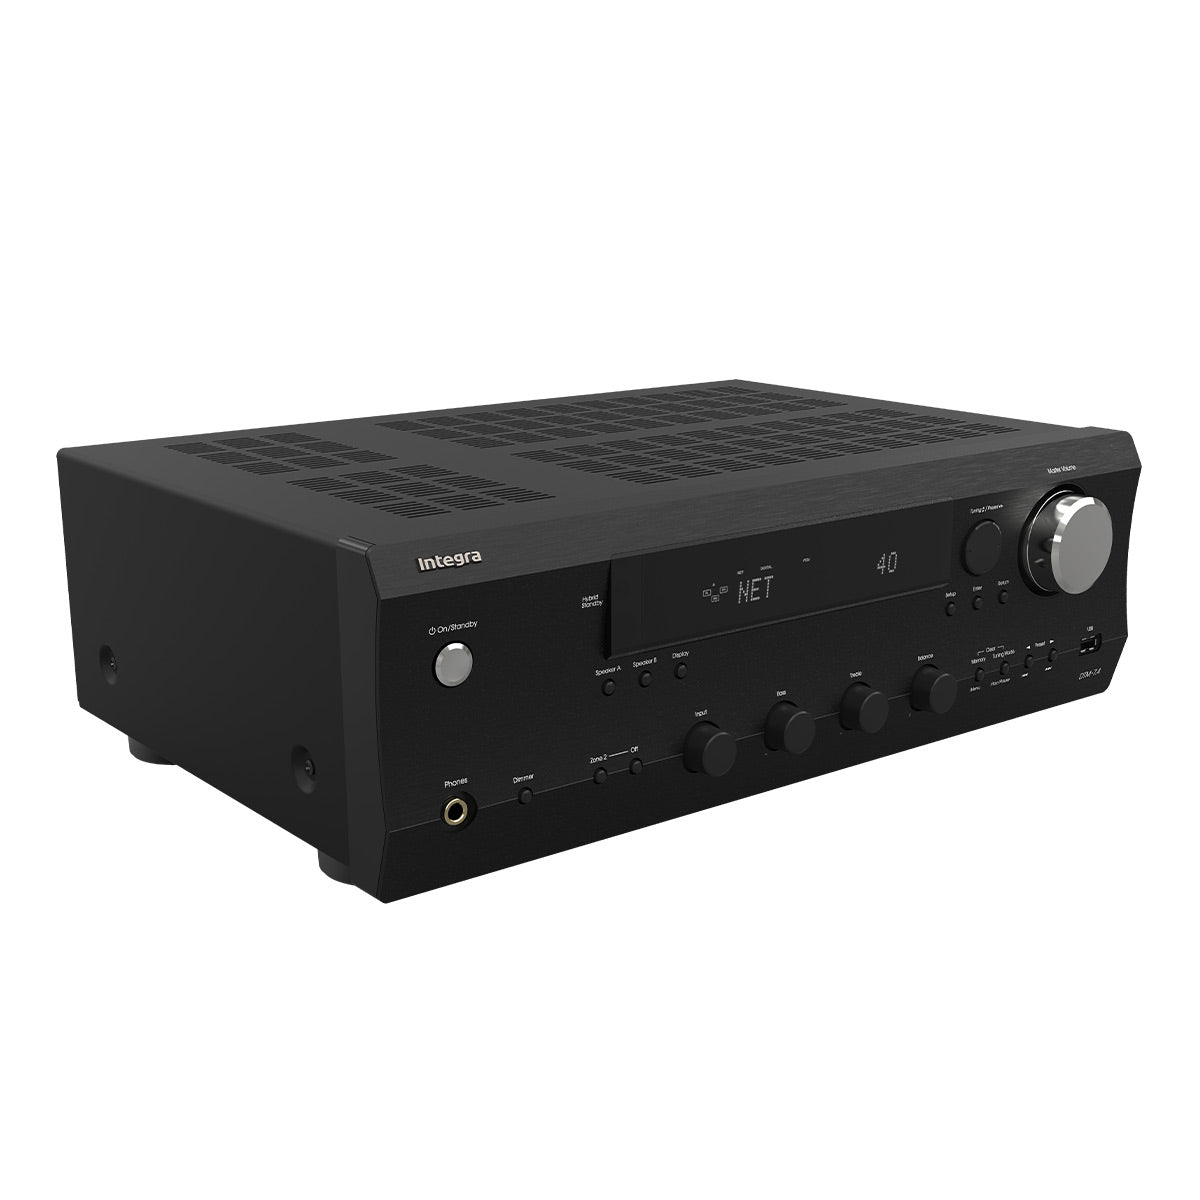 Integra DTM-7.4 Hi-Fi Network Stereo Receiver